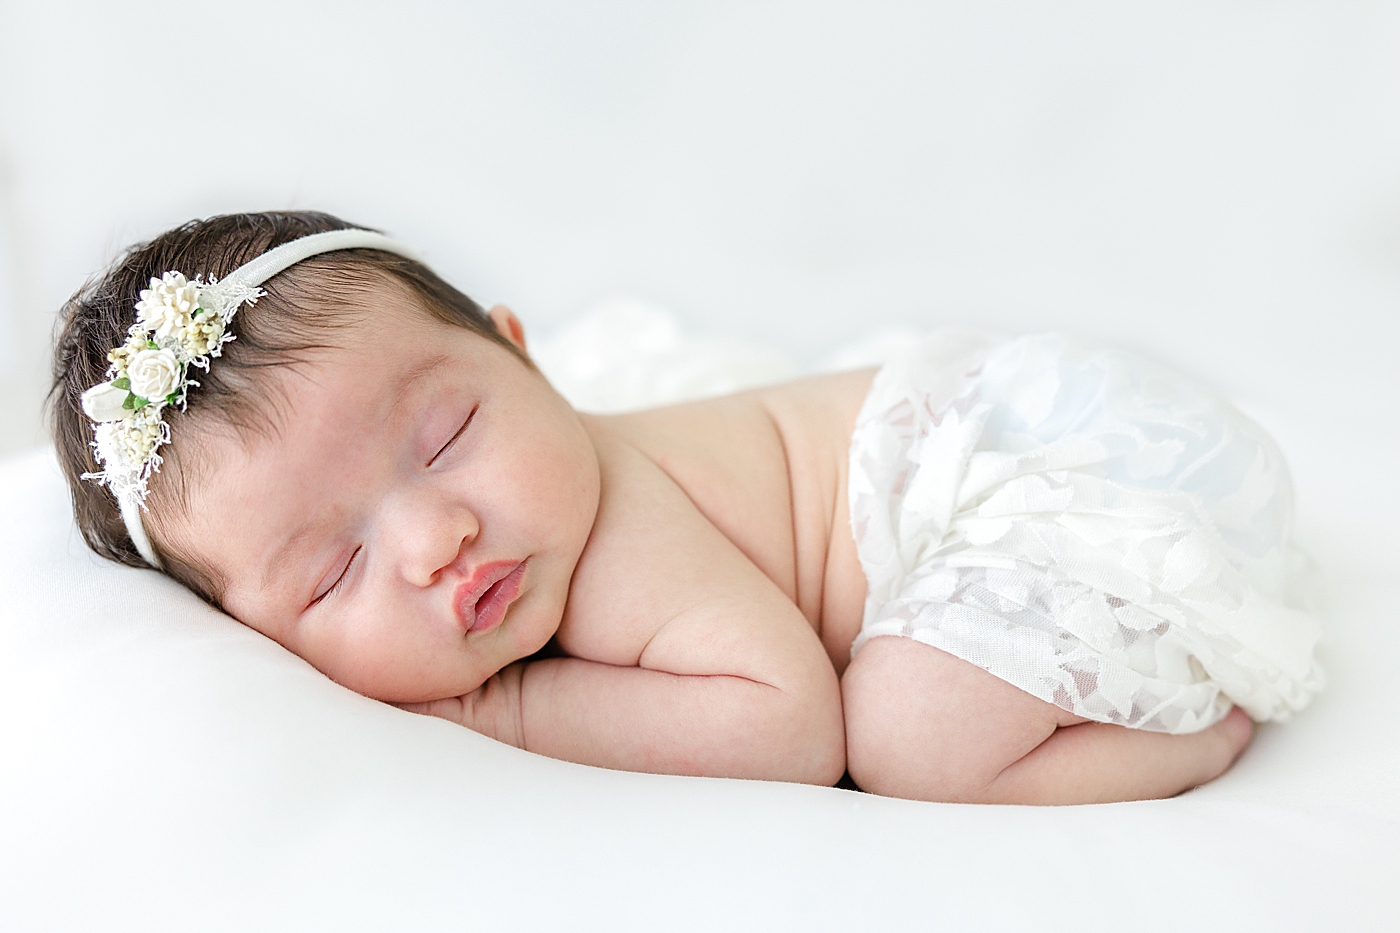 Sleeping newborn baby in white bloomers and headband | Photo by Sana Ahmed Photography